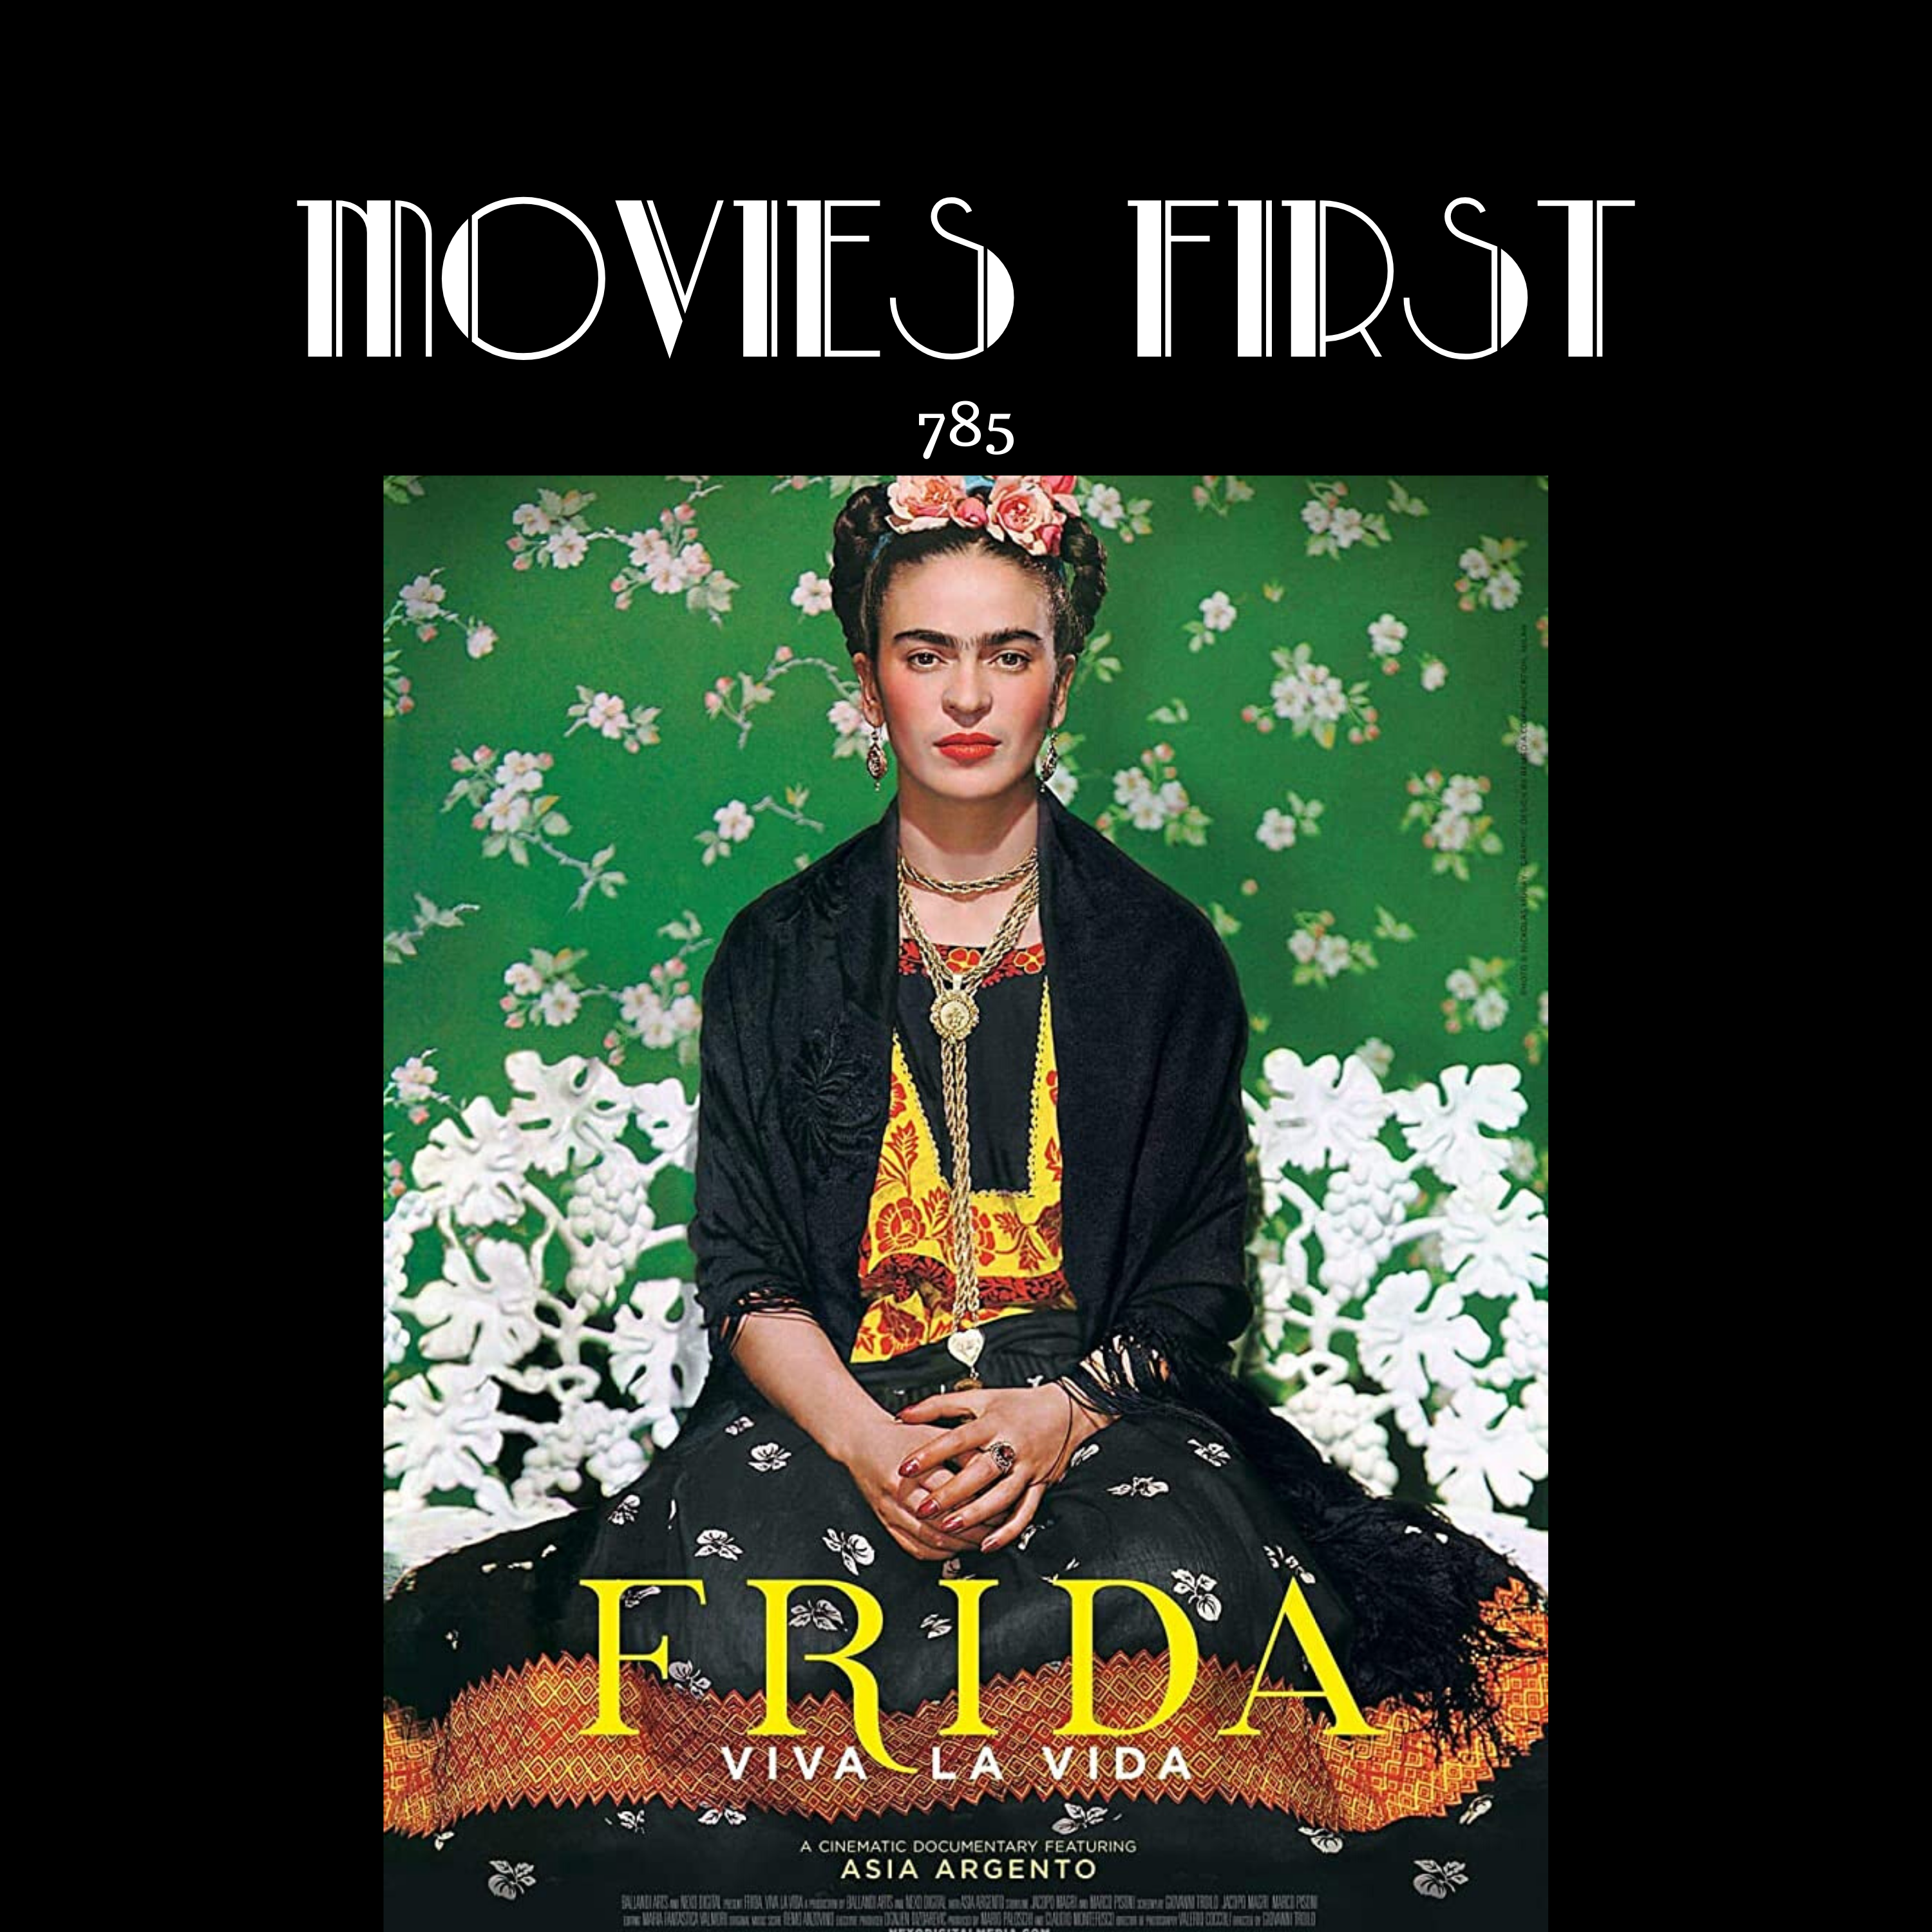 Frida. Viva la Vida (Documentary) (the @MoviesFirst review)